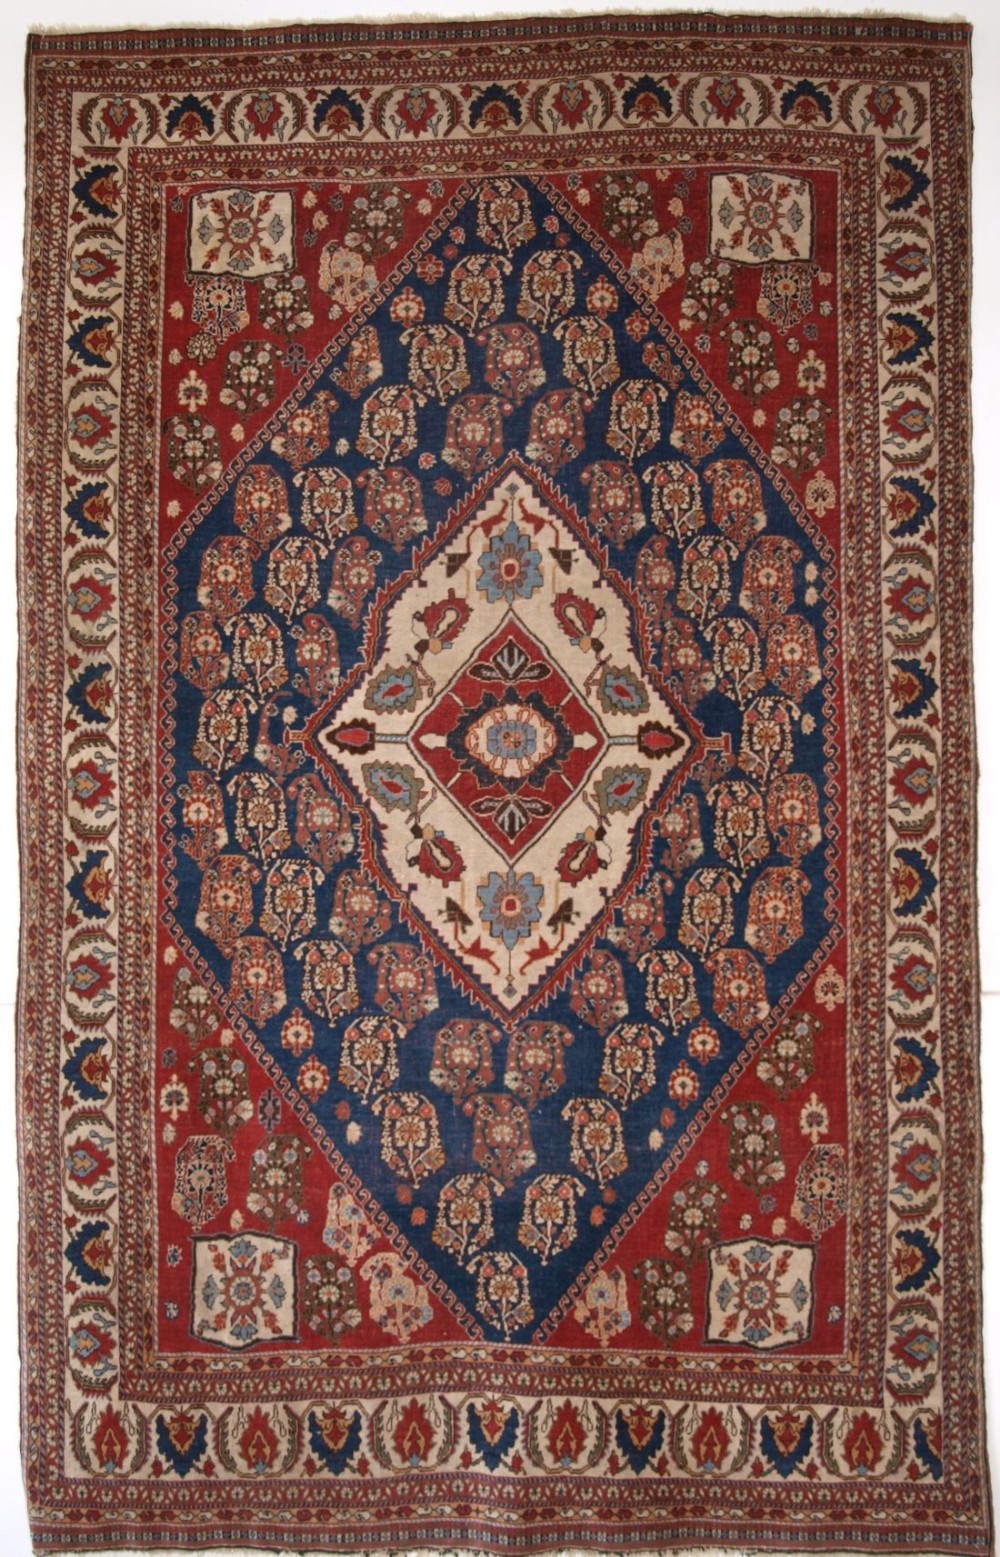 antique persian tribal qashqai kashkuli rug tribal weaving of the highest quality circa 1880